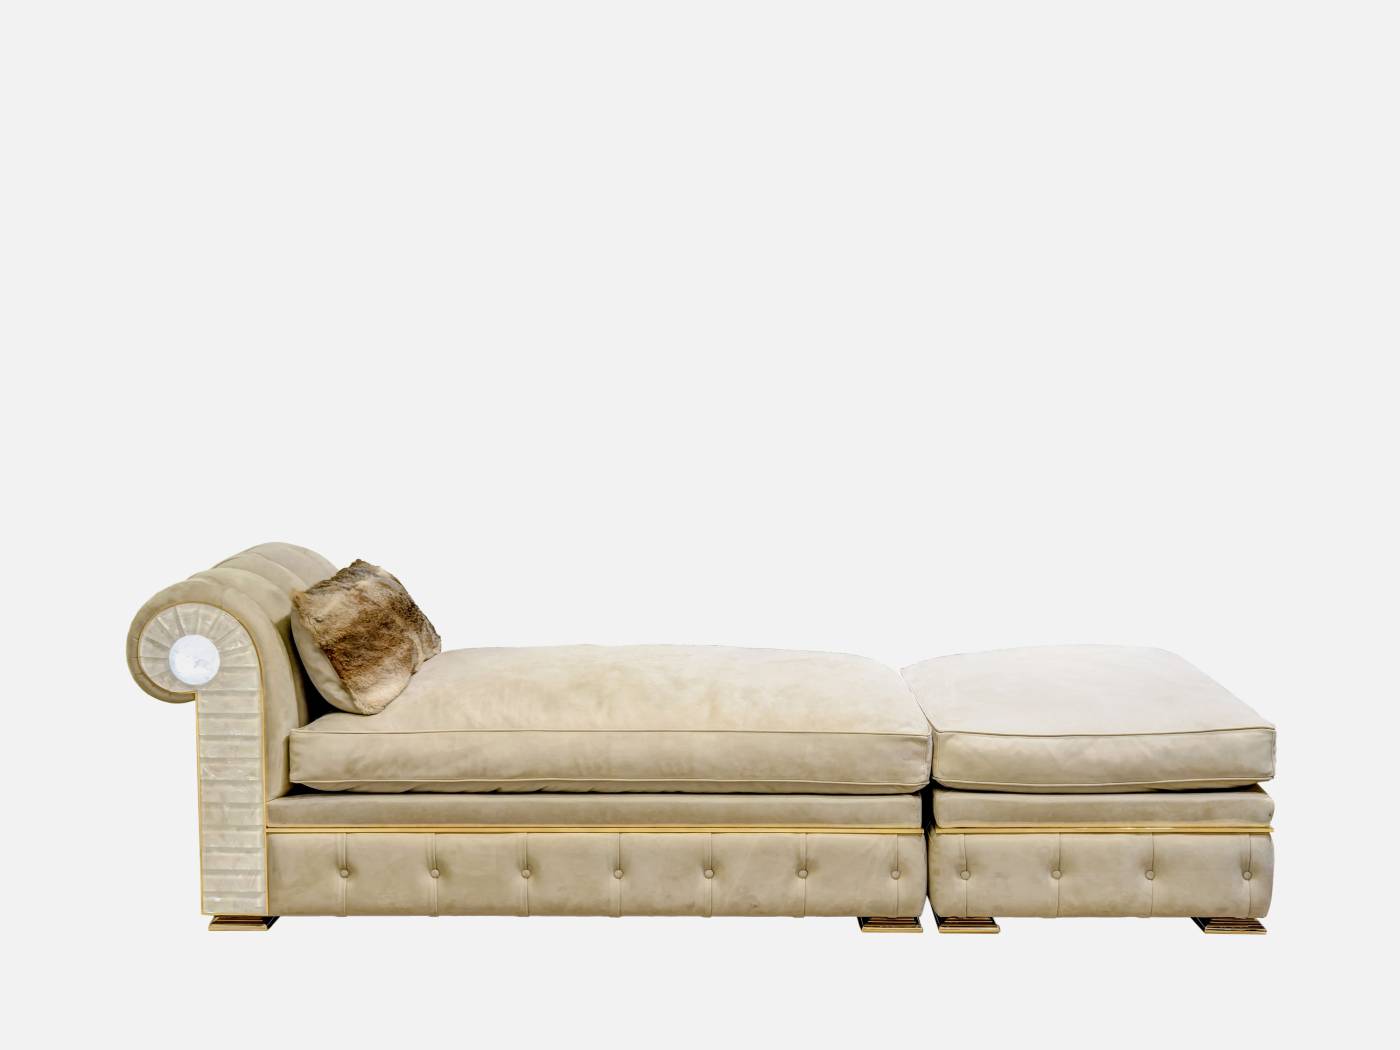 ART. 2076 – C.G. Capelletti Italian Luxury Classic Benches and dormeuses. Made in Italy classic interior design